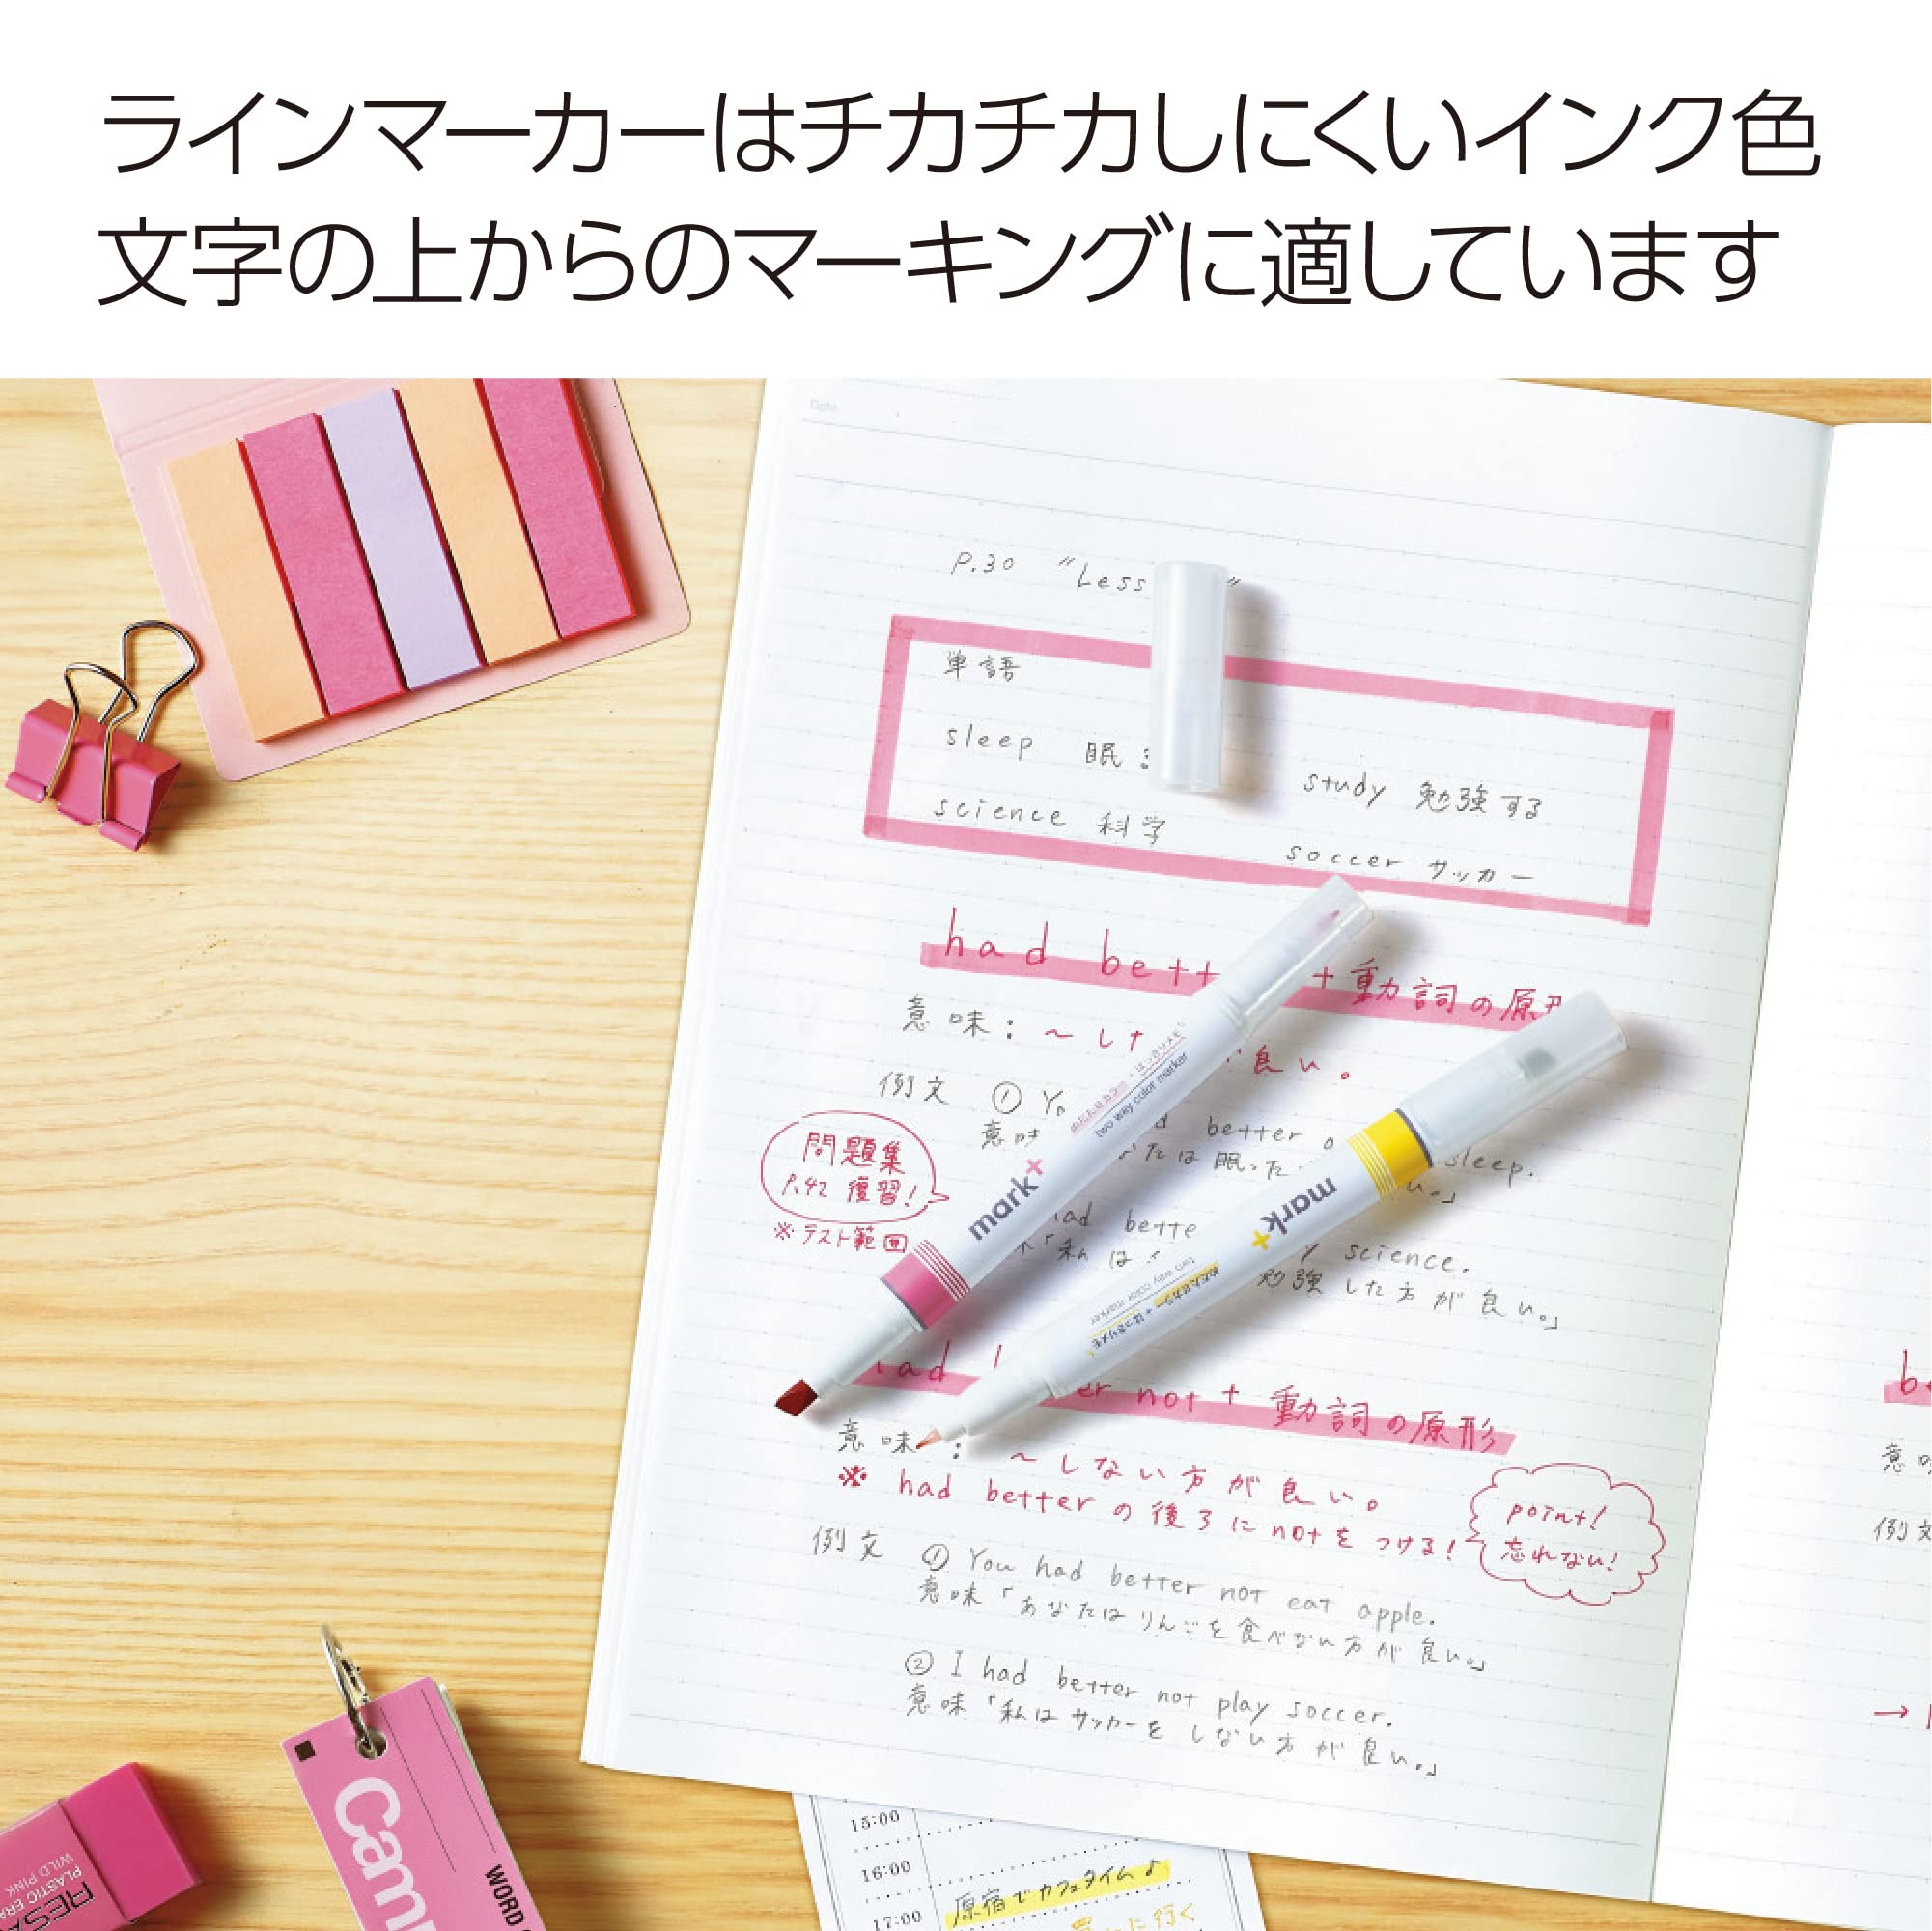 Kokuyo Japan Highlighter Pen 2 Colors Set Of 5 - Marktus Pm-Mt200-5S